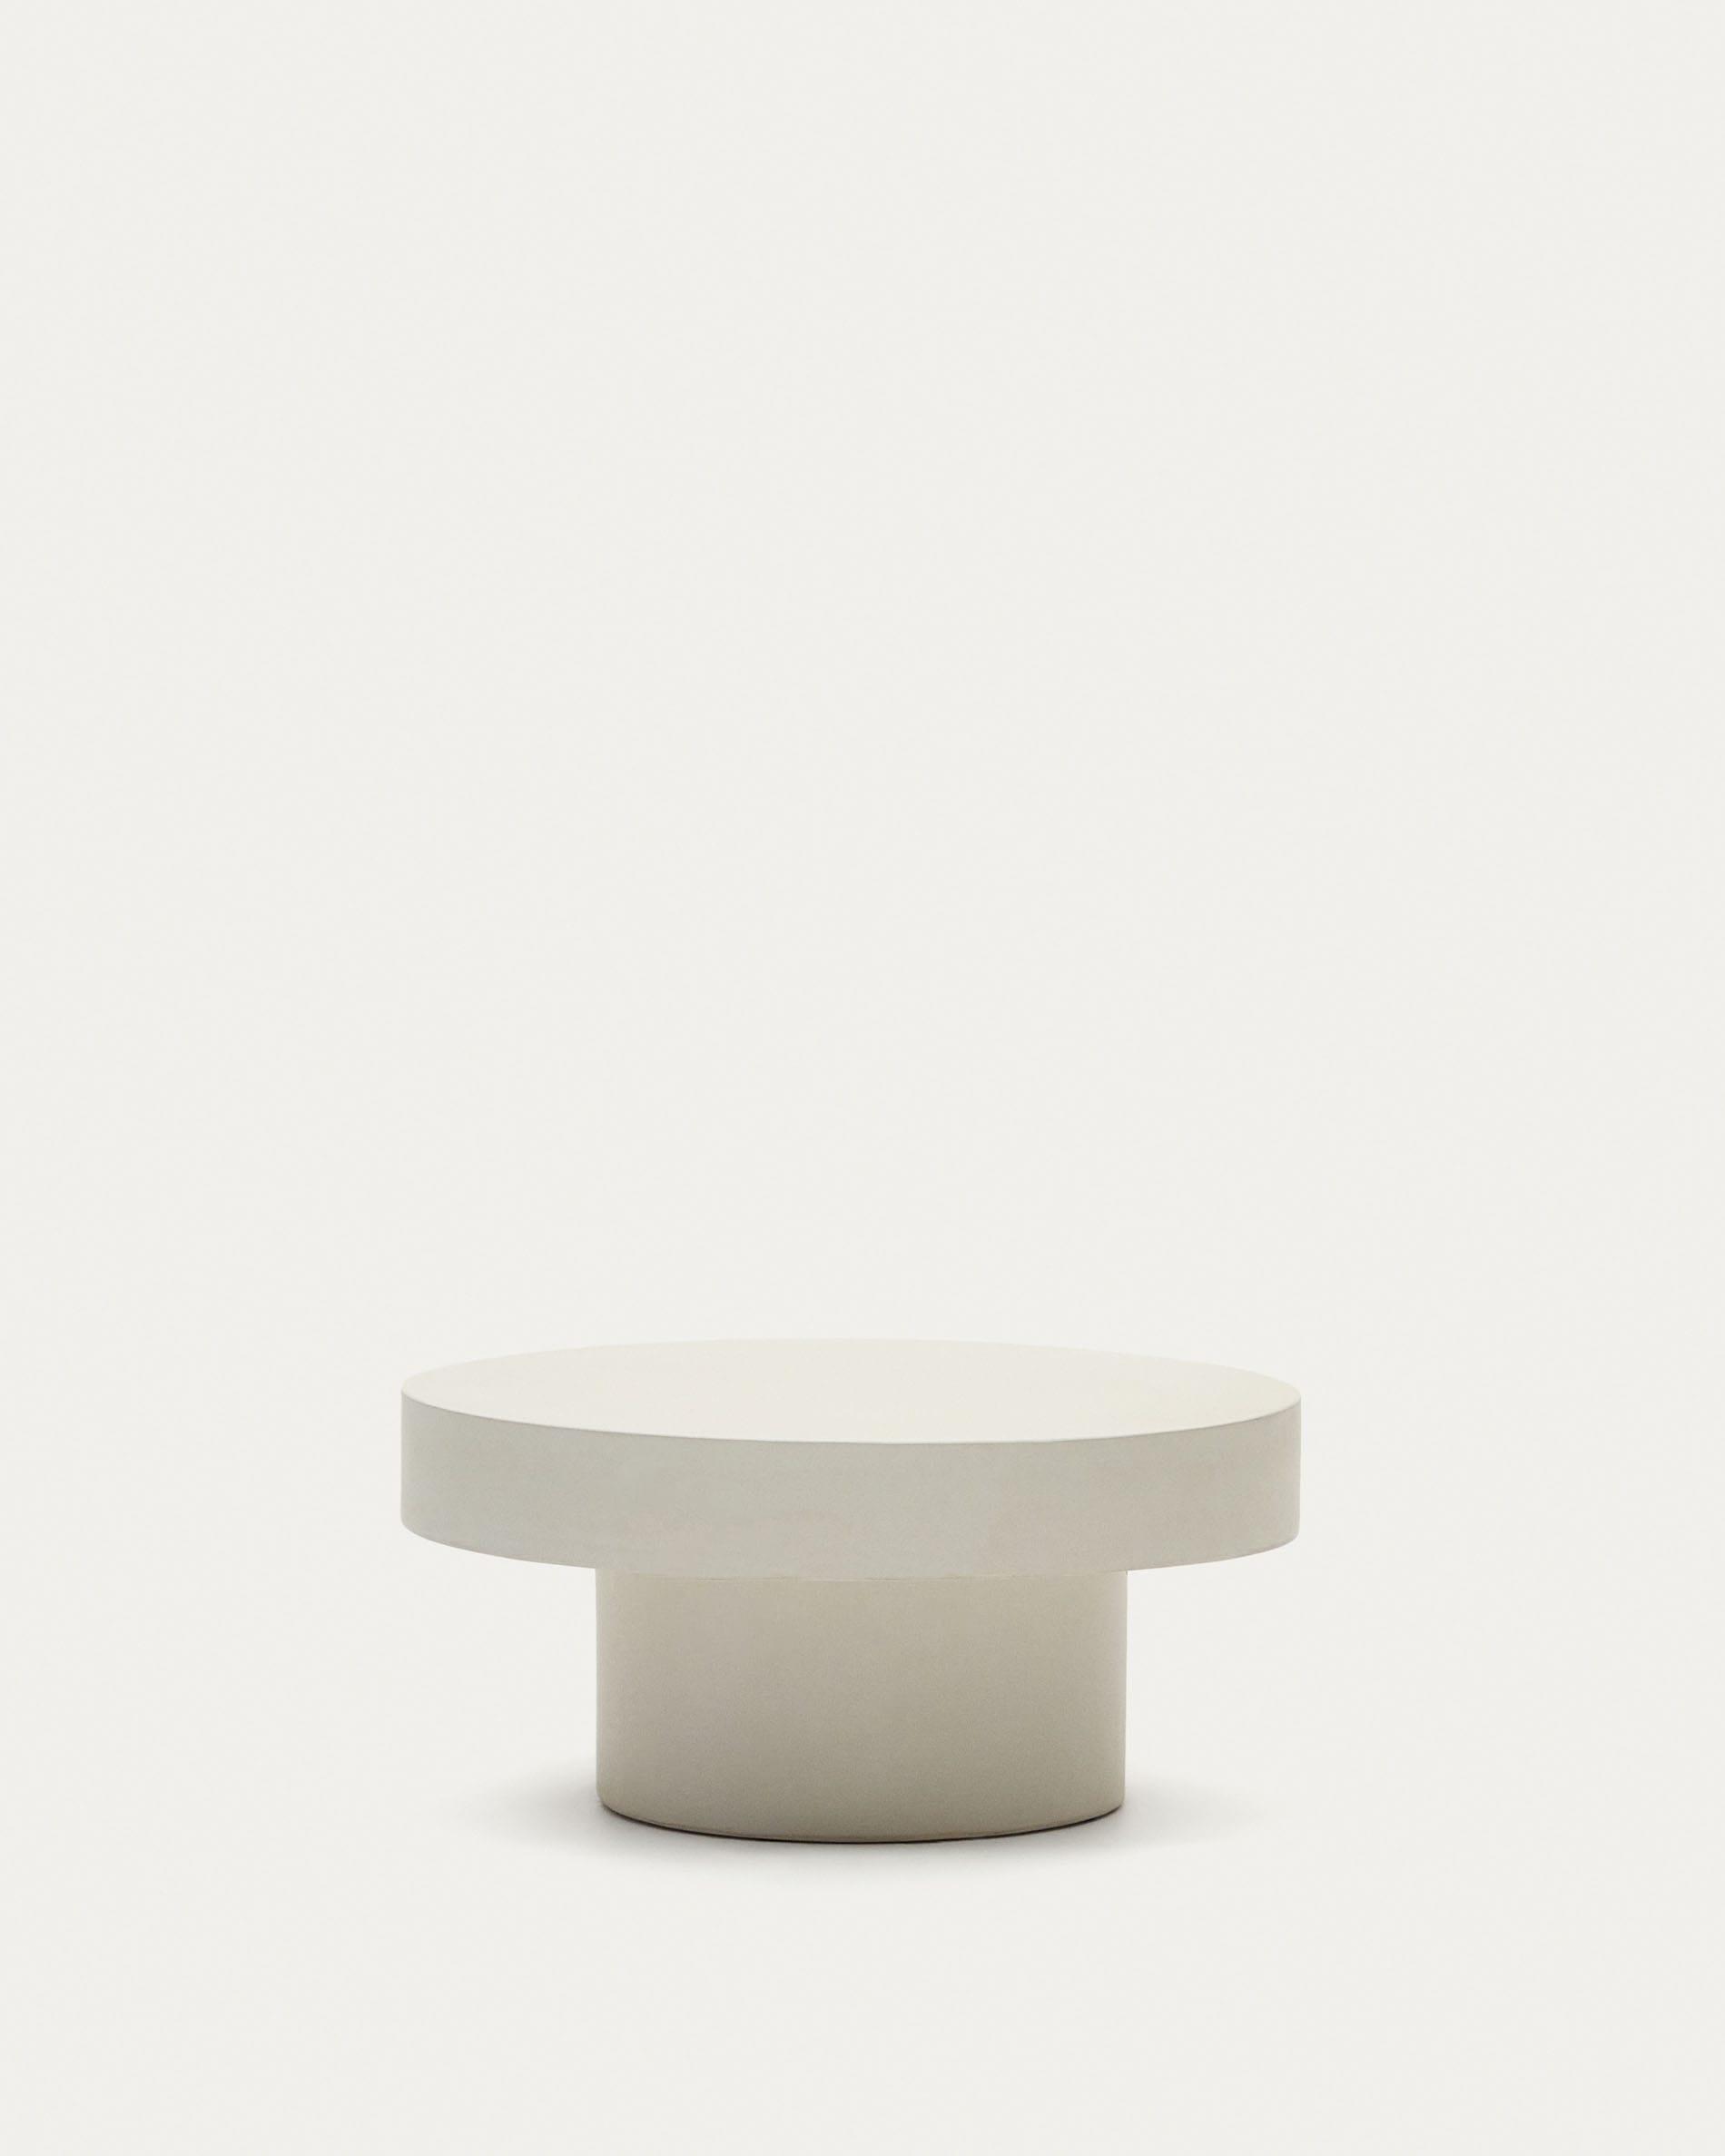 Aiguablava round coffee table in white cement, Ø 66 cm